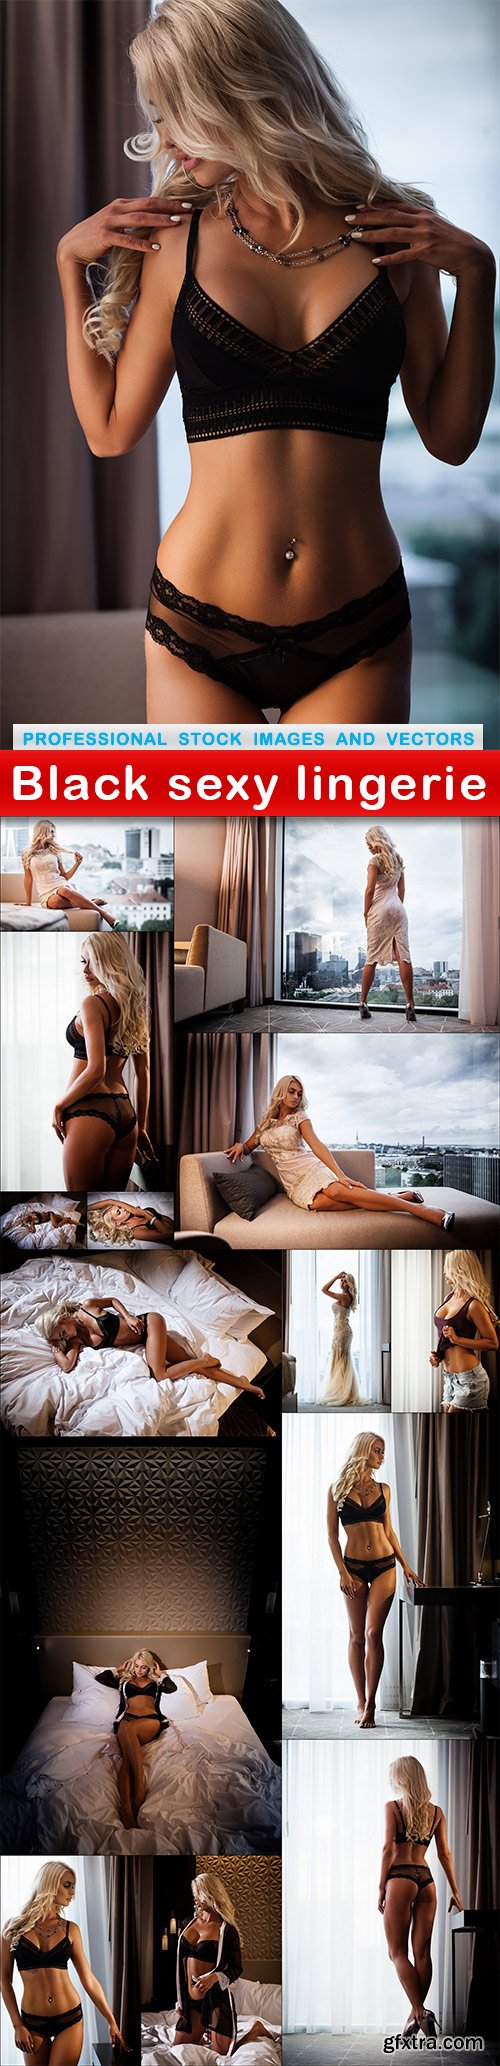 Black sexy lingerie - 15 UHQ JPEG